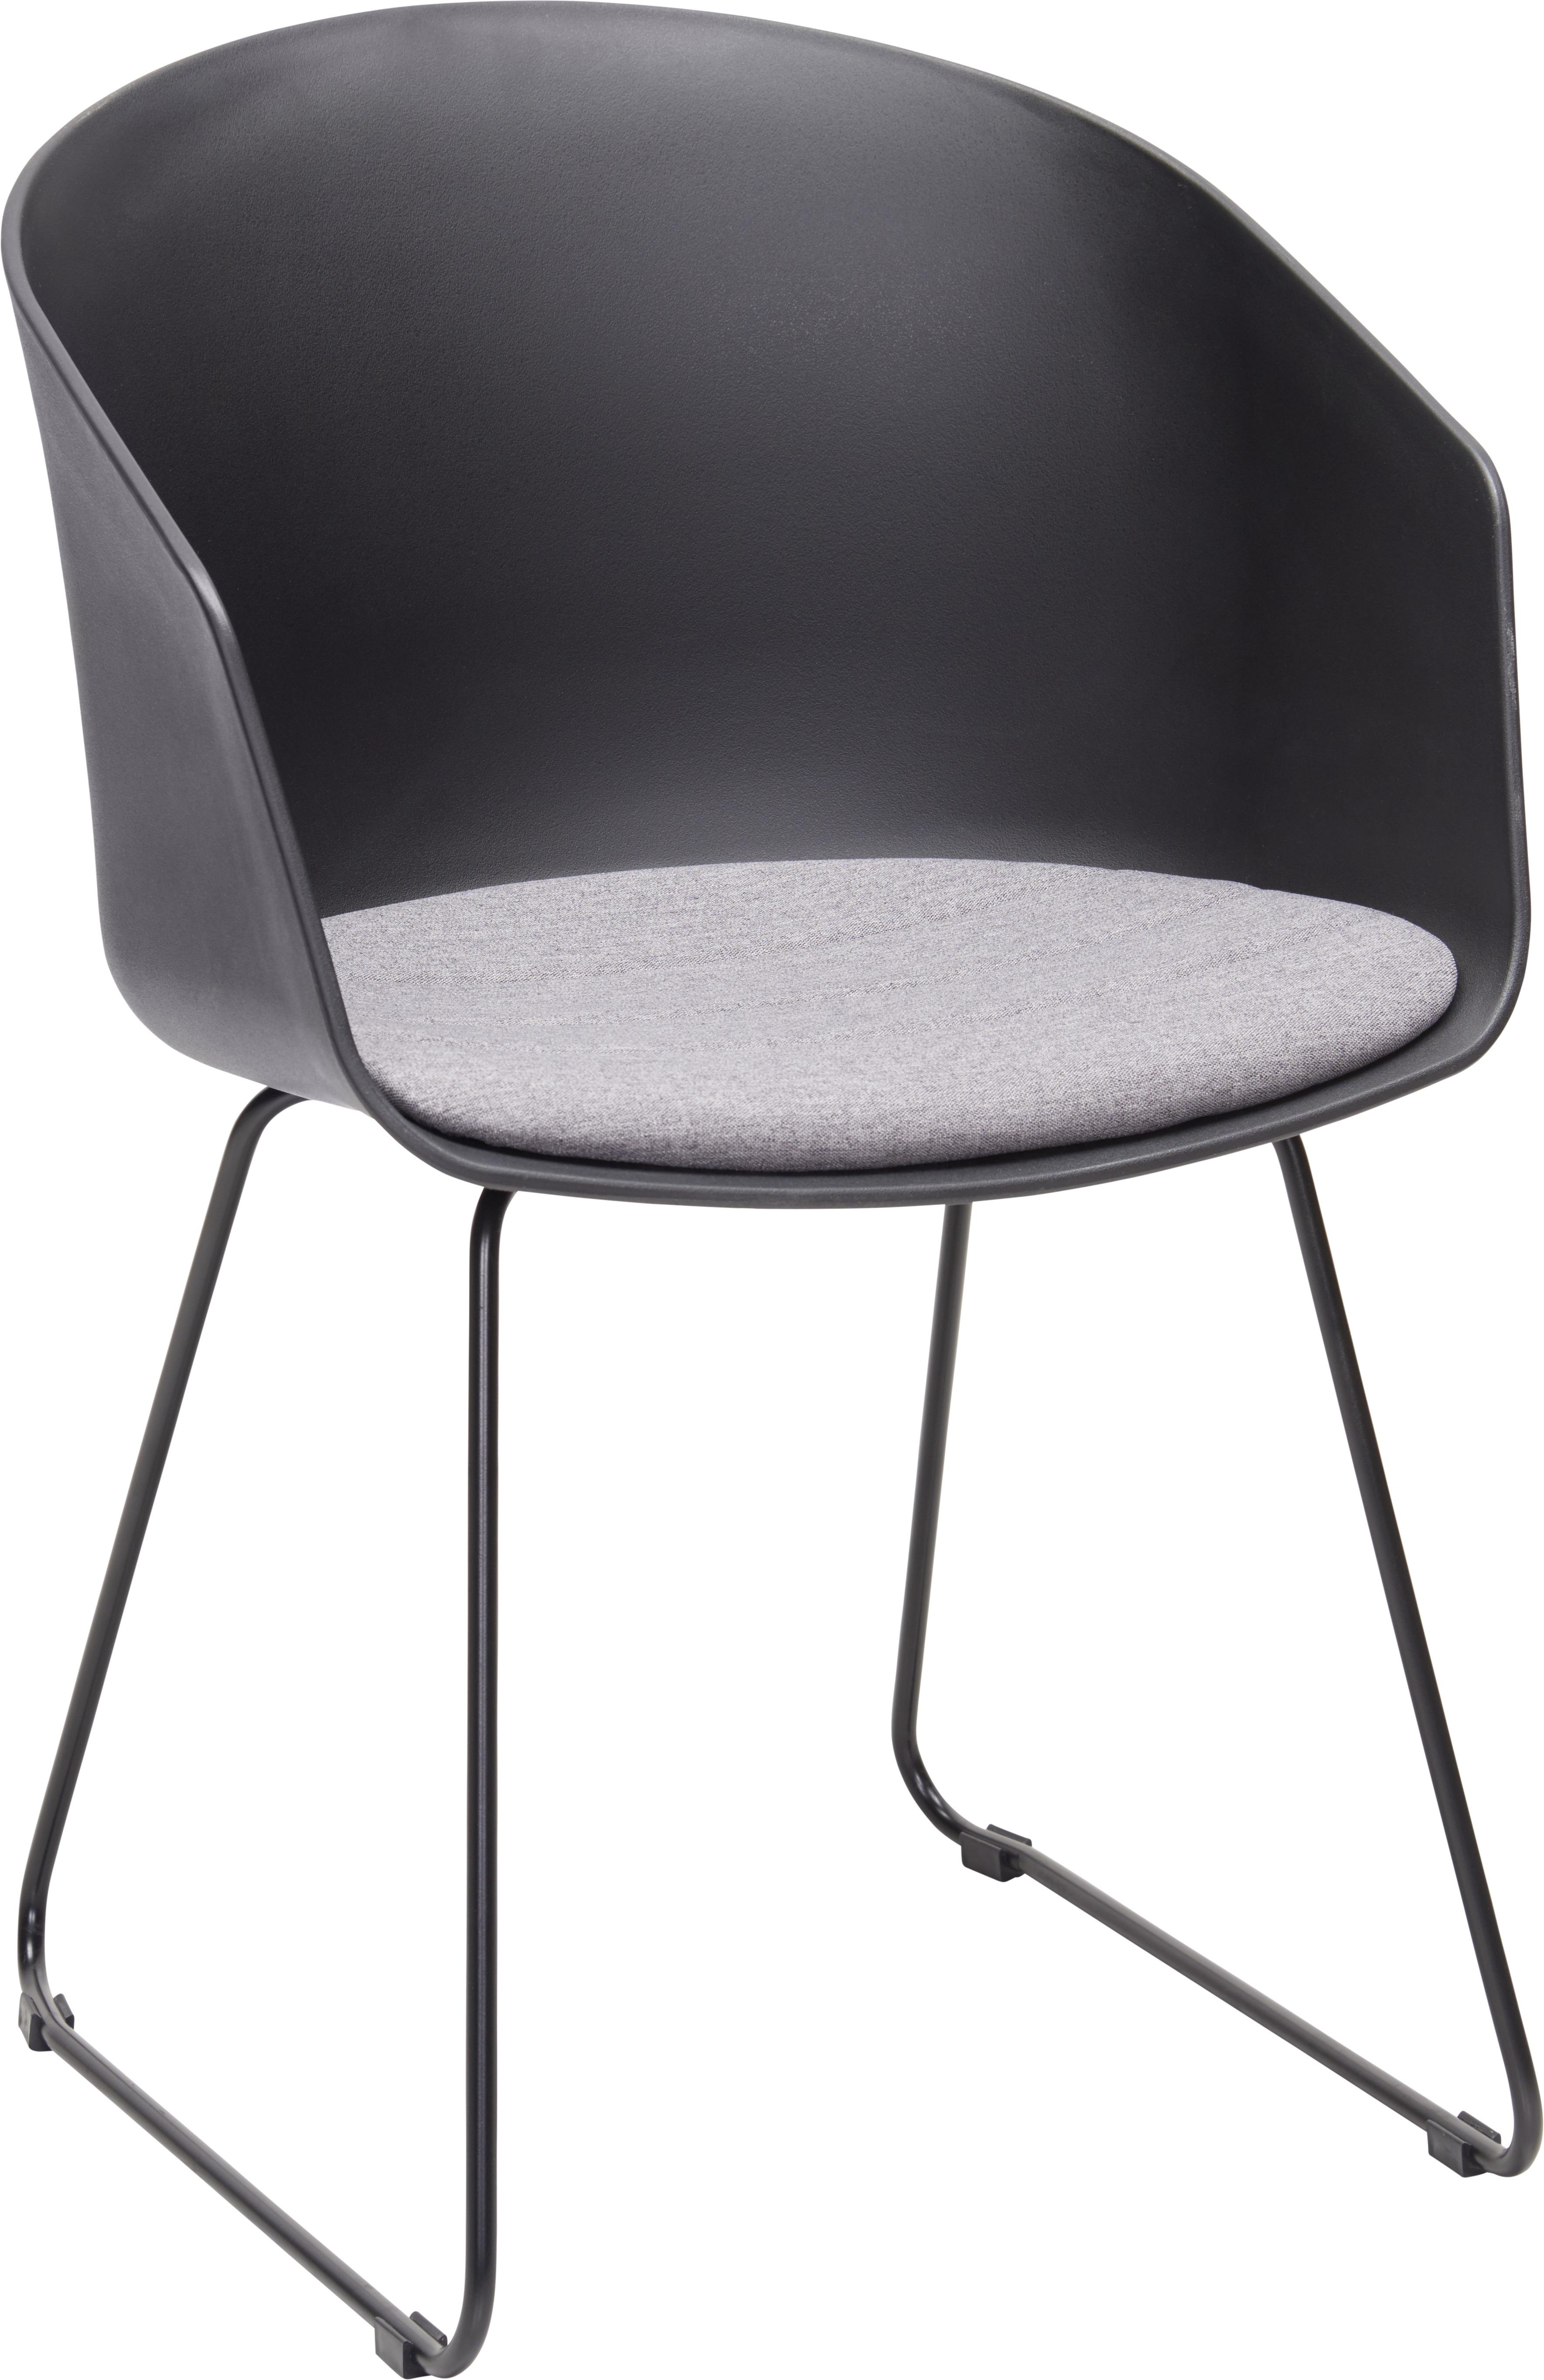 Židle S Područkami Bogart - šedá/černá, Design, kov/textil (51/81/51,5cm) - Carryhome